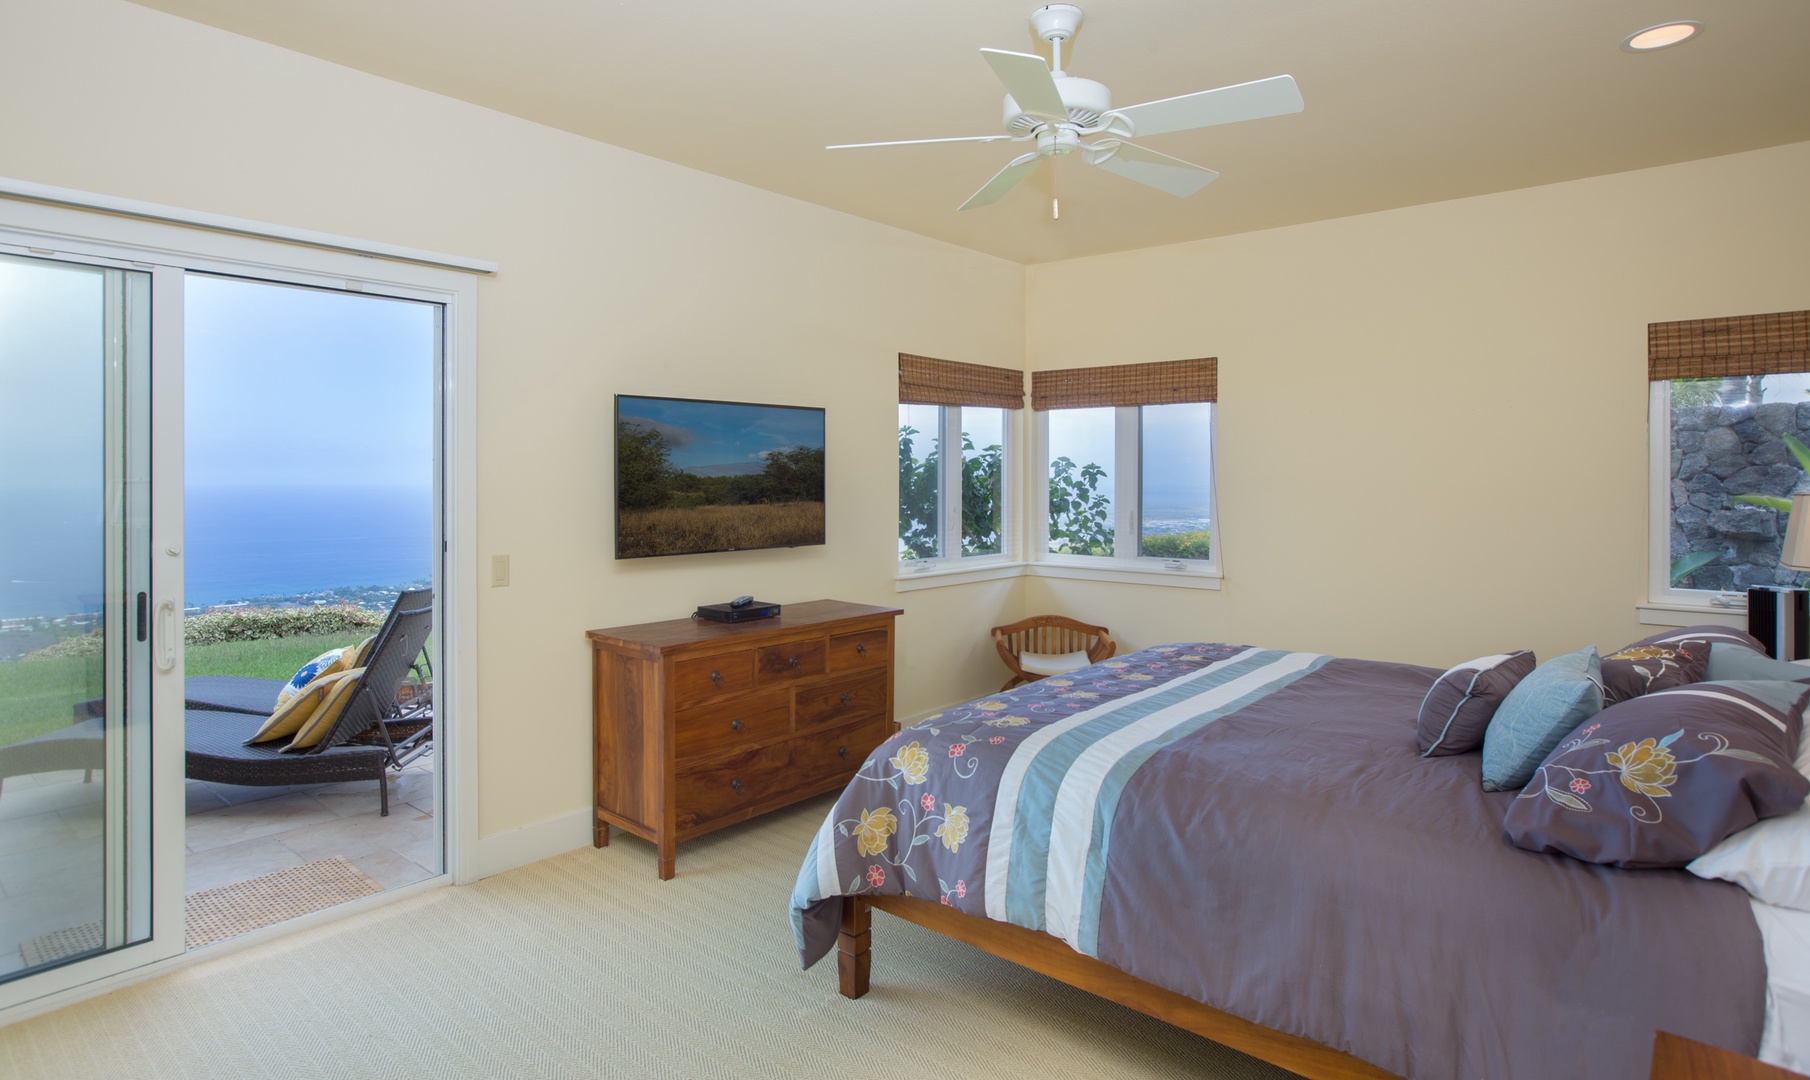 Kailua Kona Vacation Rentals, Hale Maluhia (Big Island) - Spacious Primary Bedroom with unbelievable views